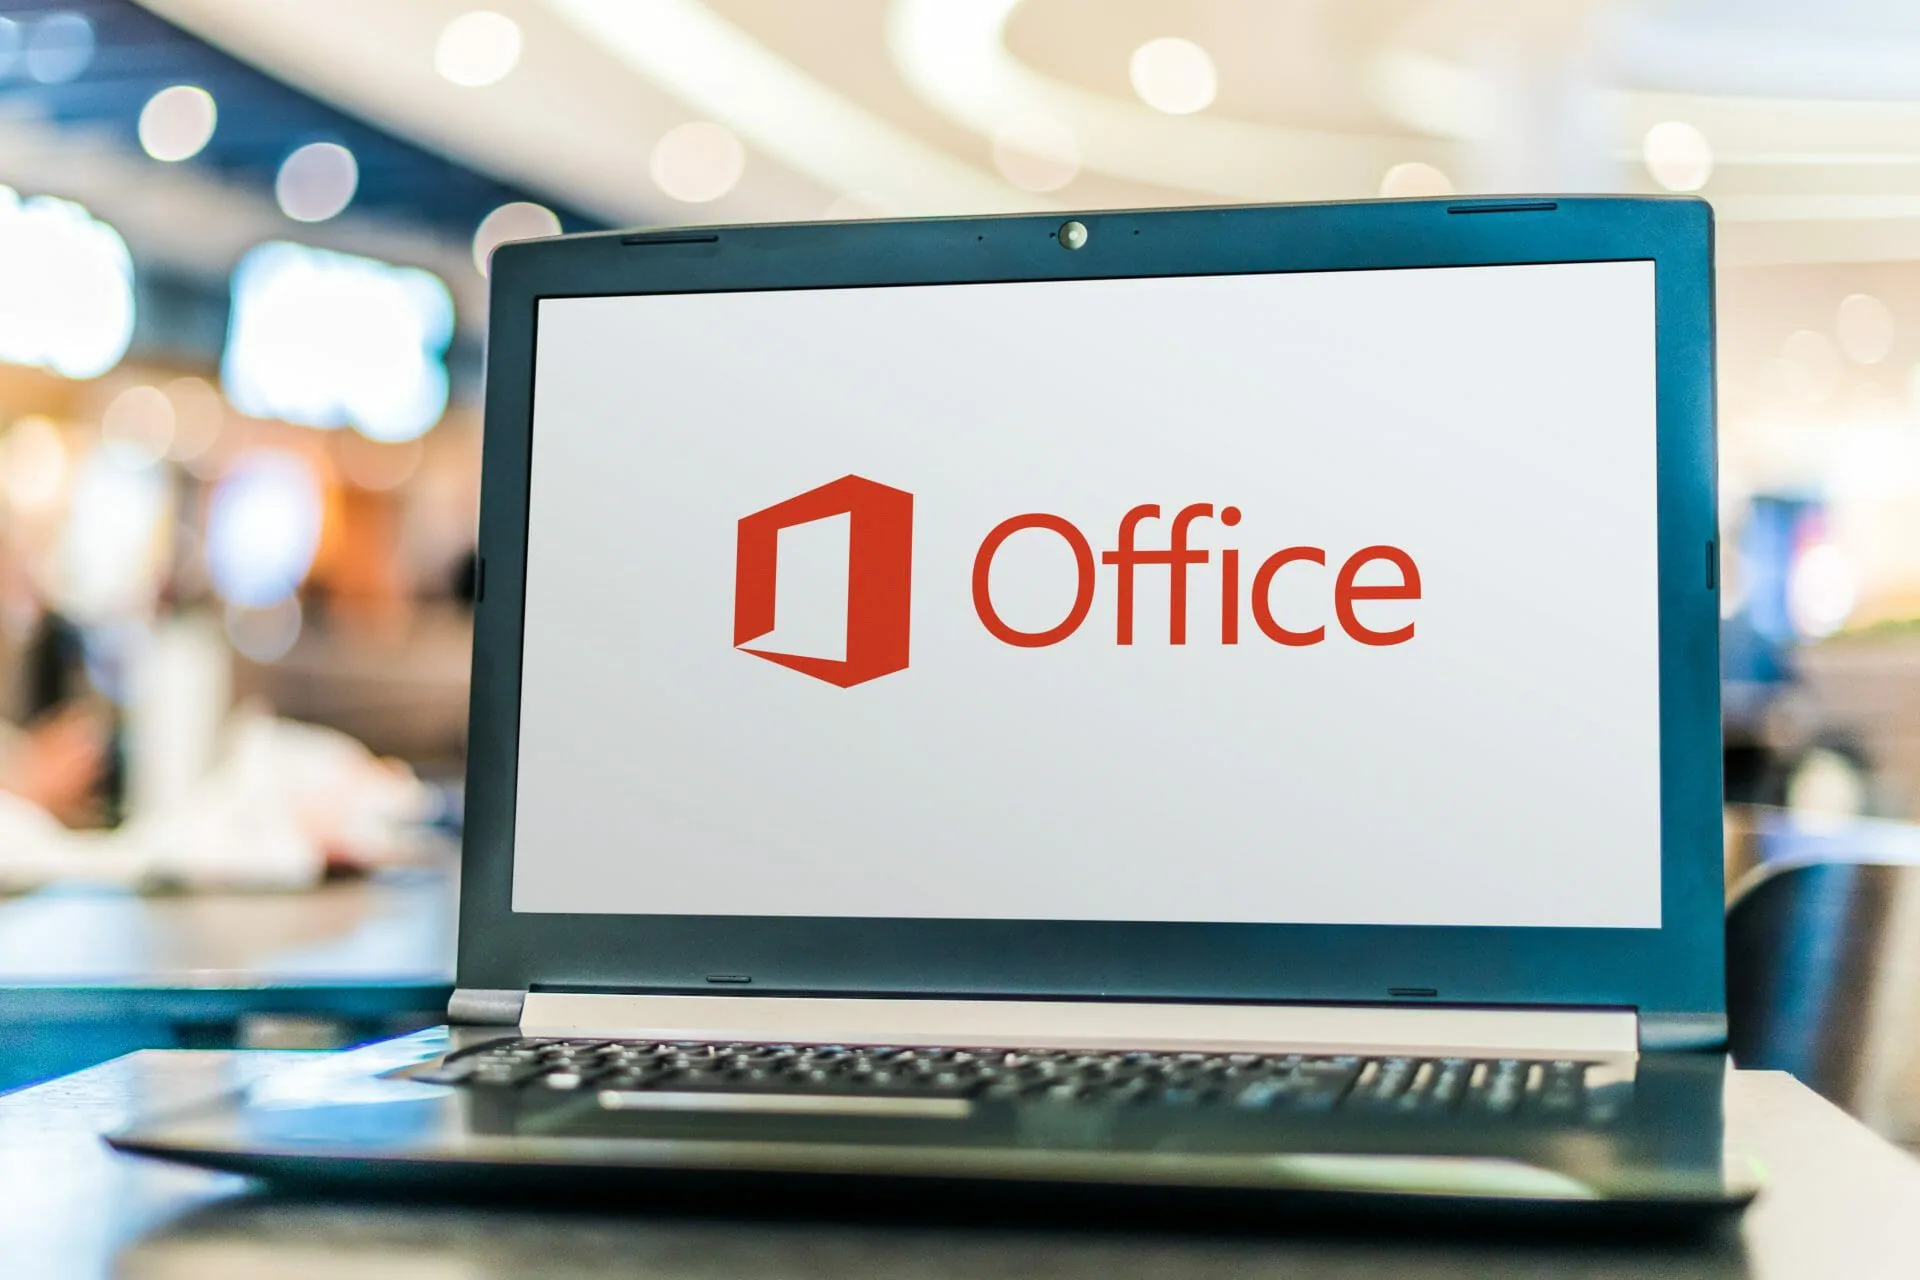 laptopok, amelyekhez Microsoft Office tartozik